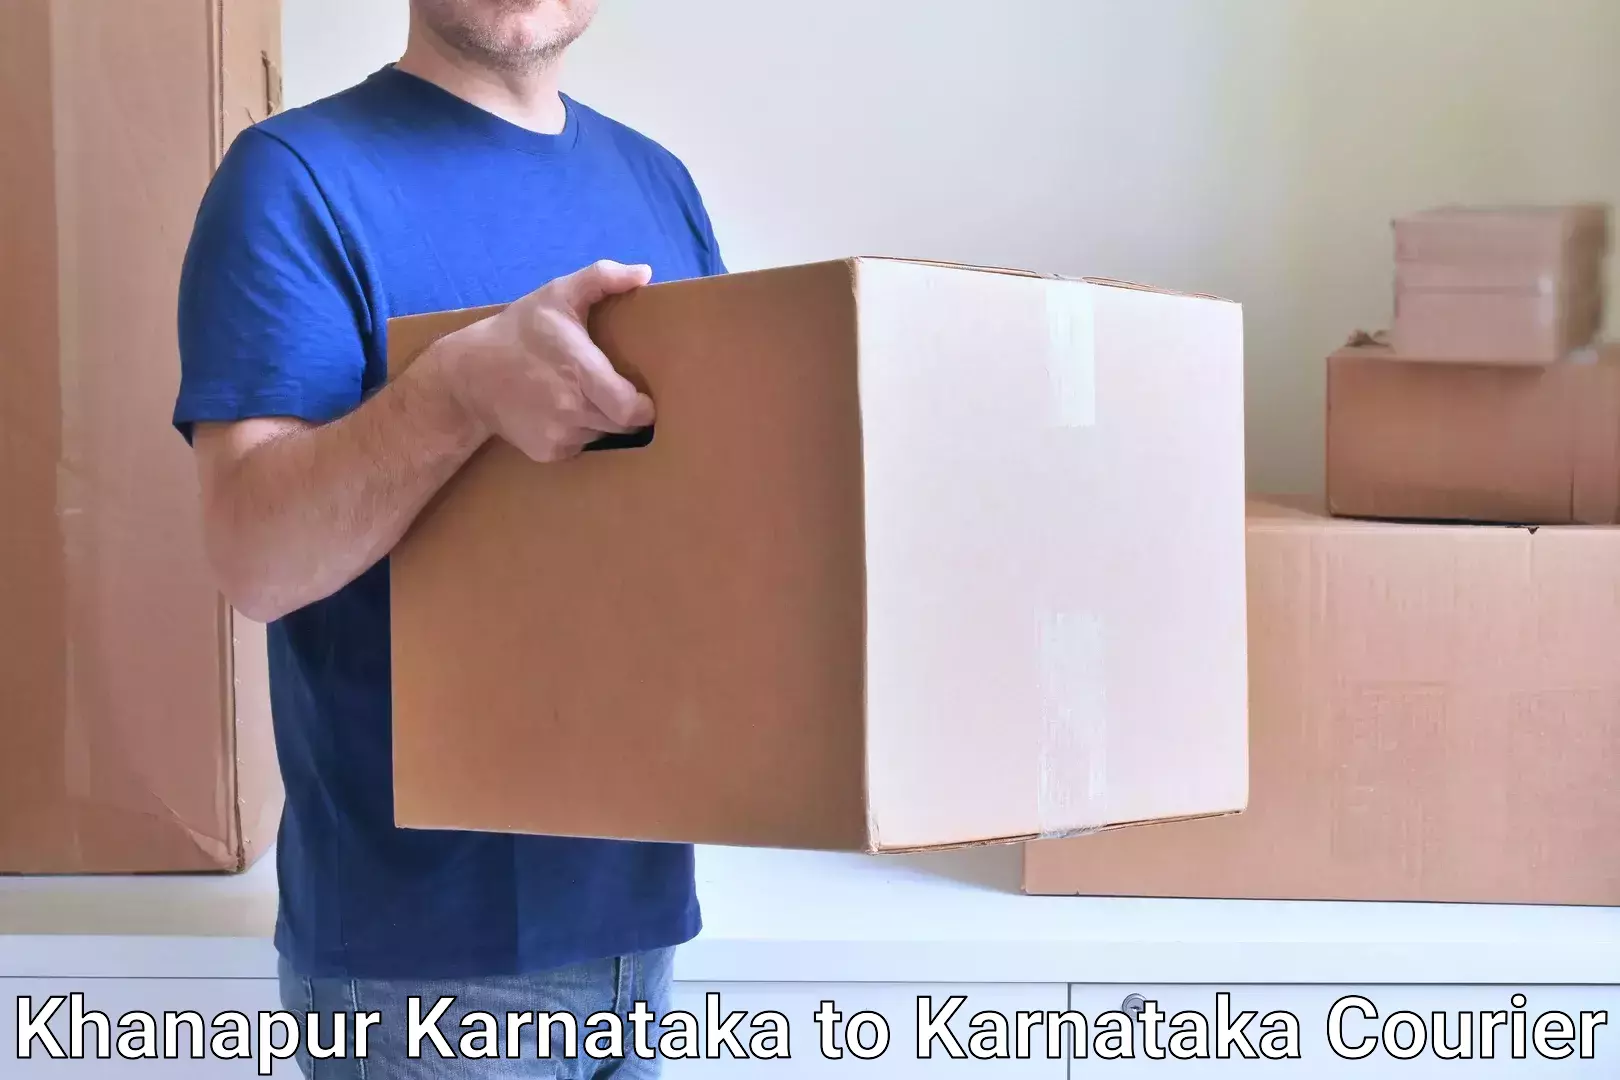 Budget-friendly shipping Khanapur Karnataka to Mangalore Port